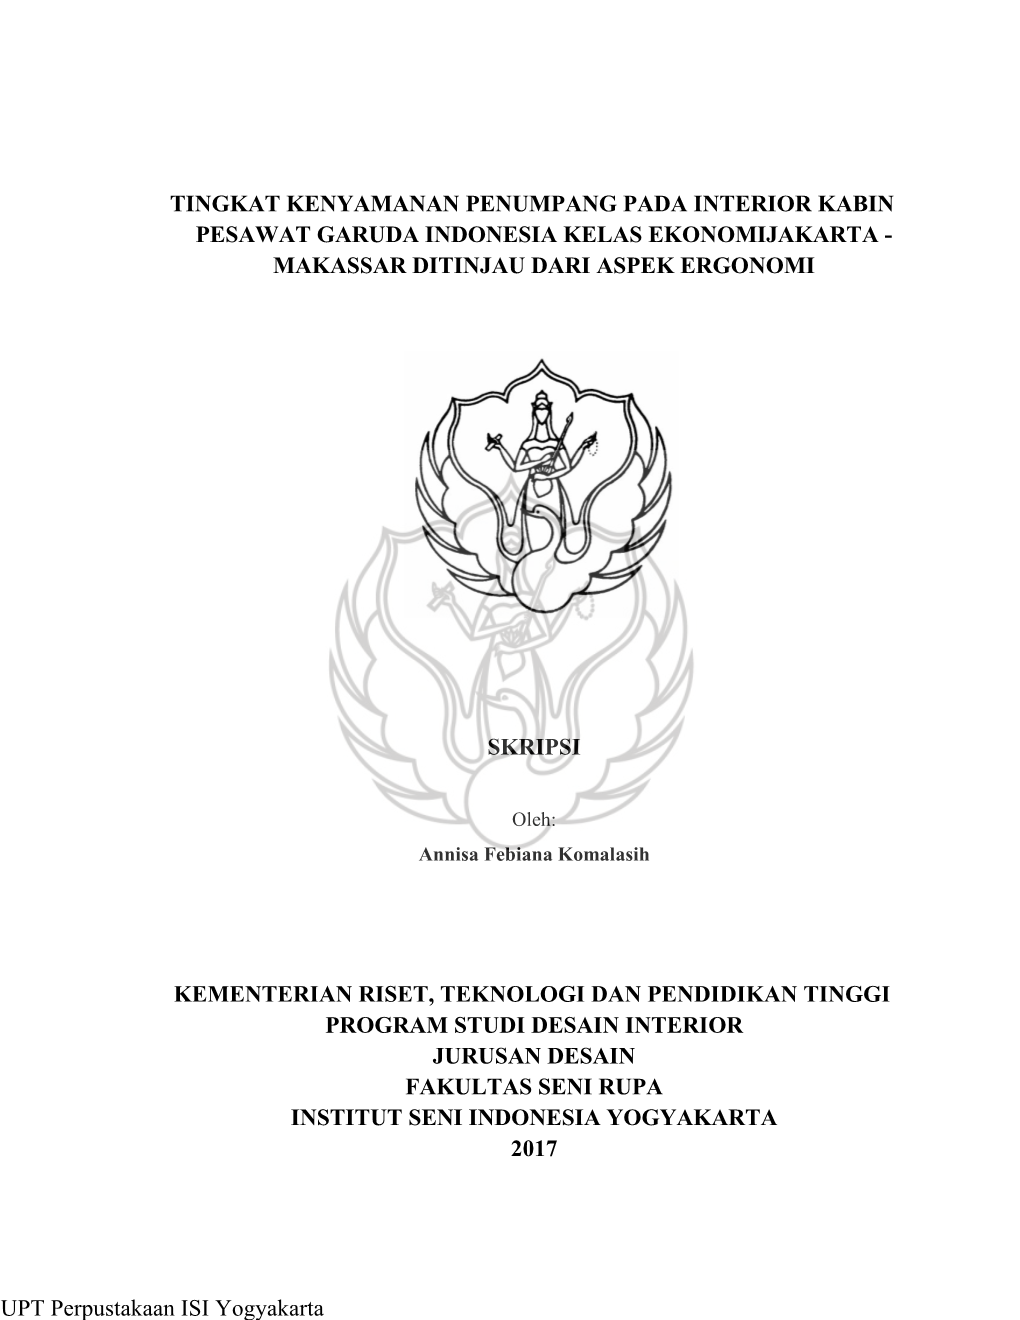 Tingkat Kenyamanan Penumpang Pada Interior Kabin Pesawat Garuda Indonesia Kelas Ekonomijakarta - Makassar Ditinjau Dari Aspek Ergonomi